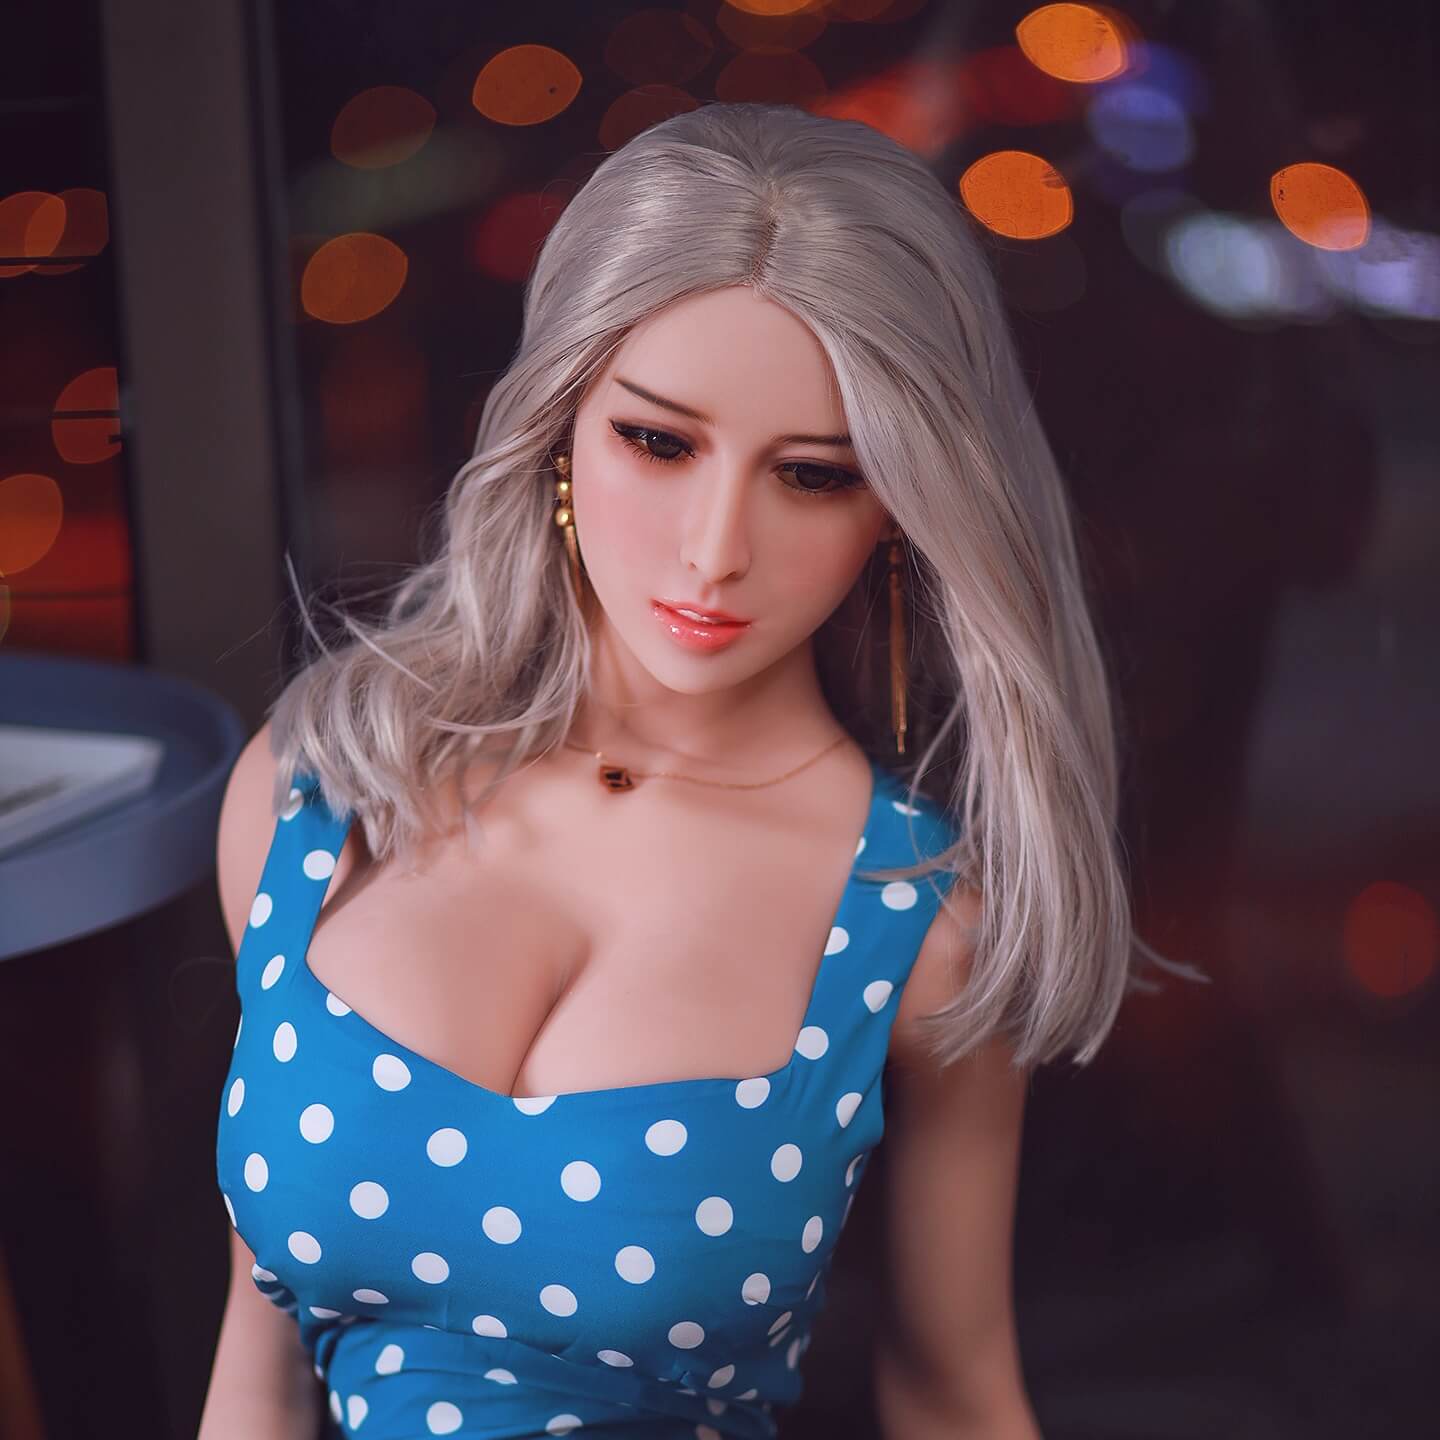 JY Doll - Realistic Sex Doll - 5ft 7in (170cm) - Alexa - Love Dolls 4U